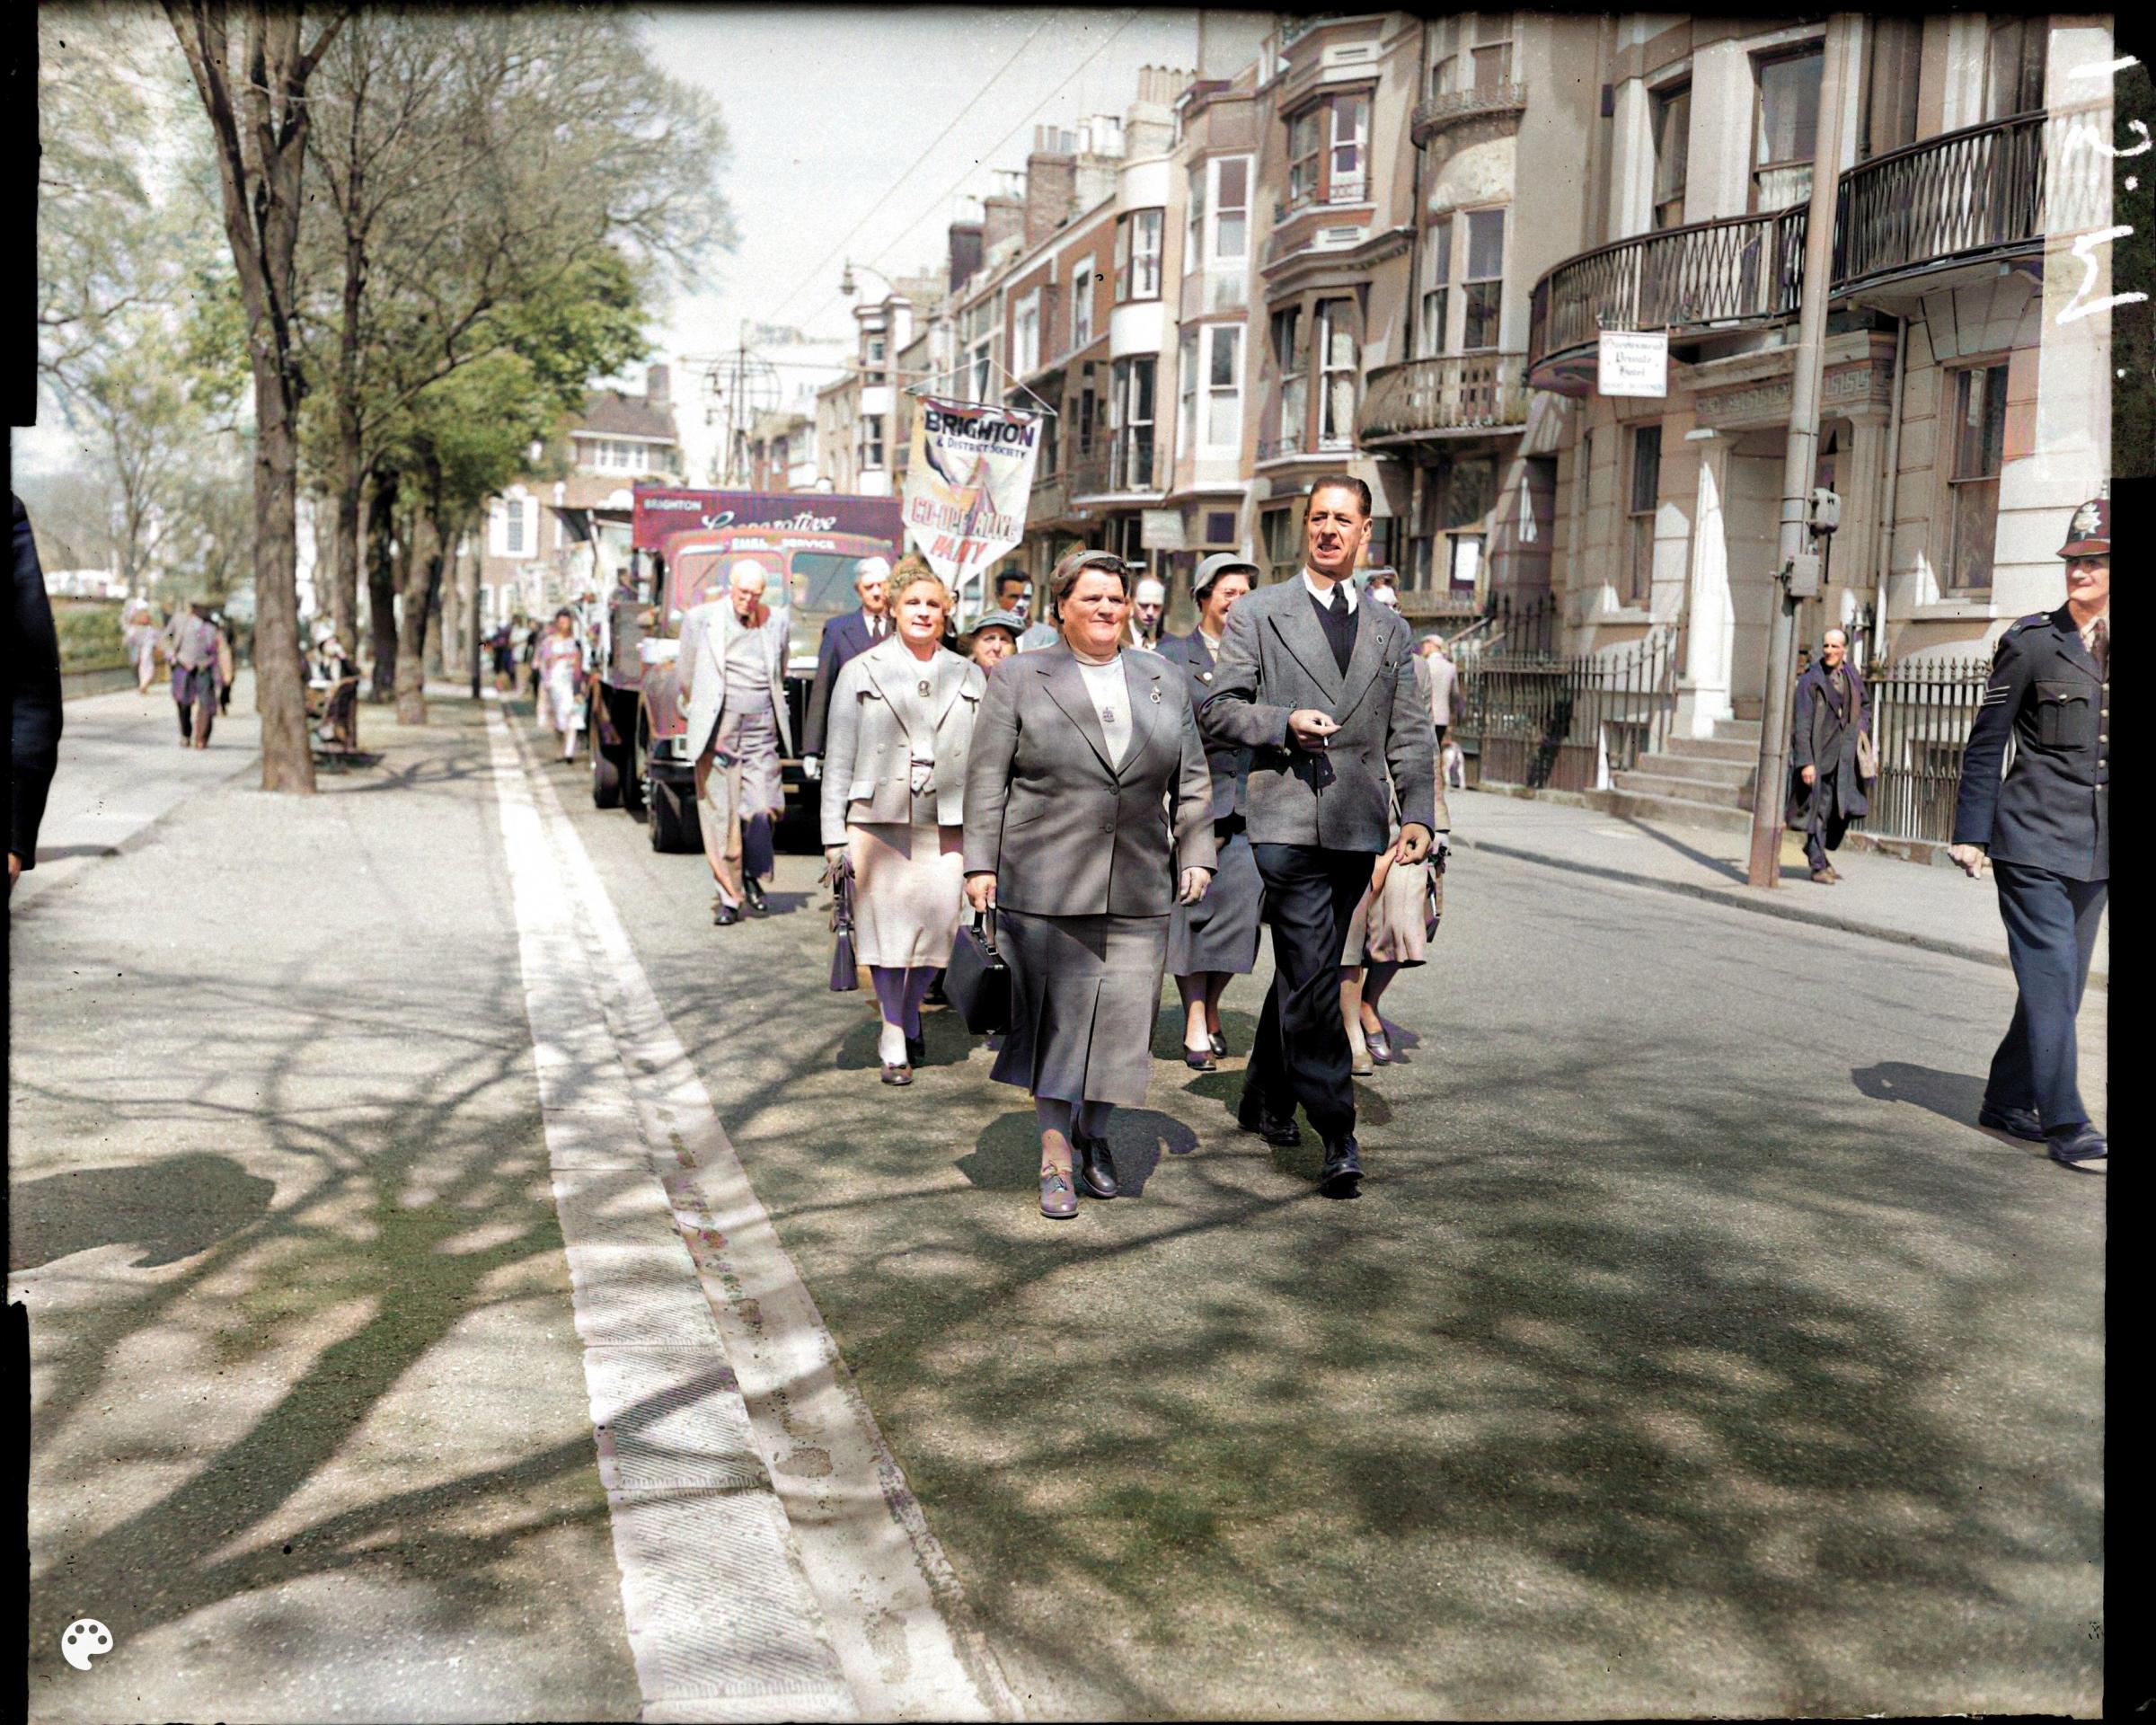 A march through Brighton, 1952